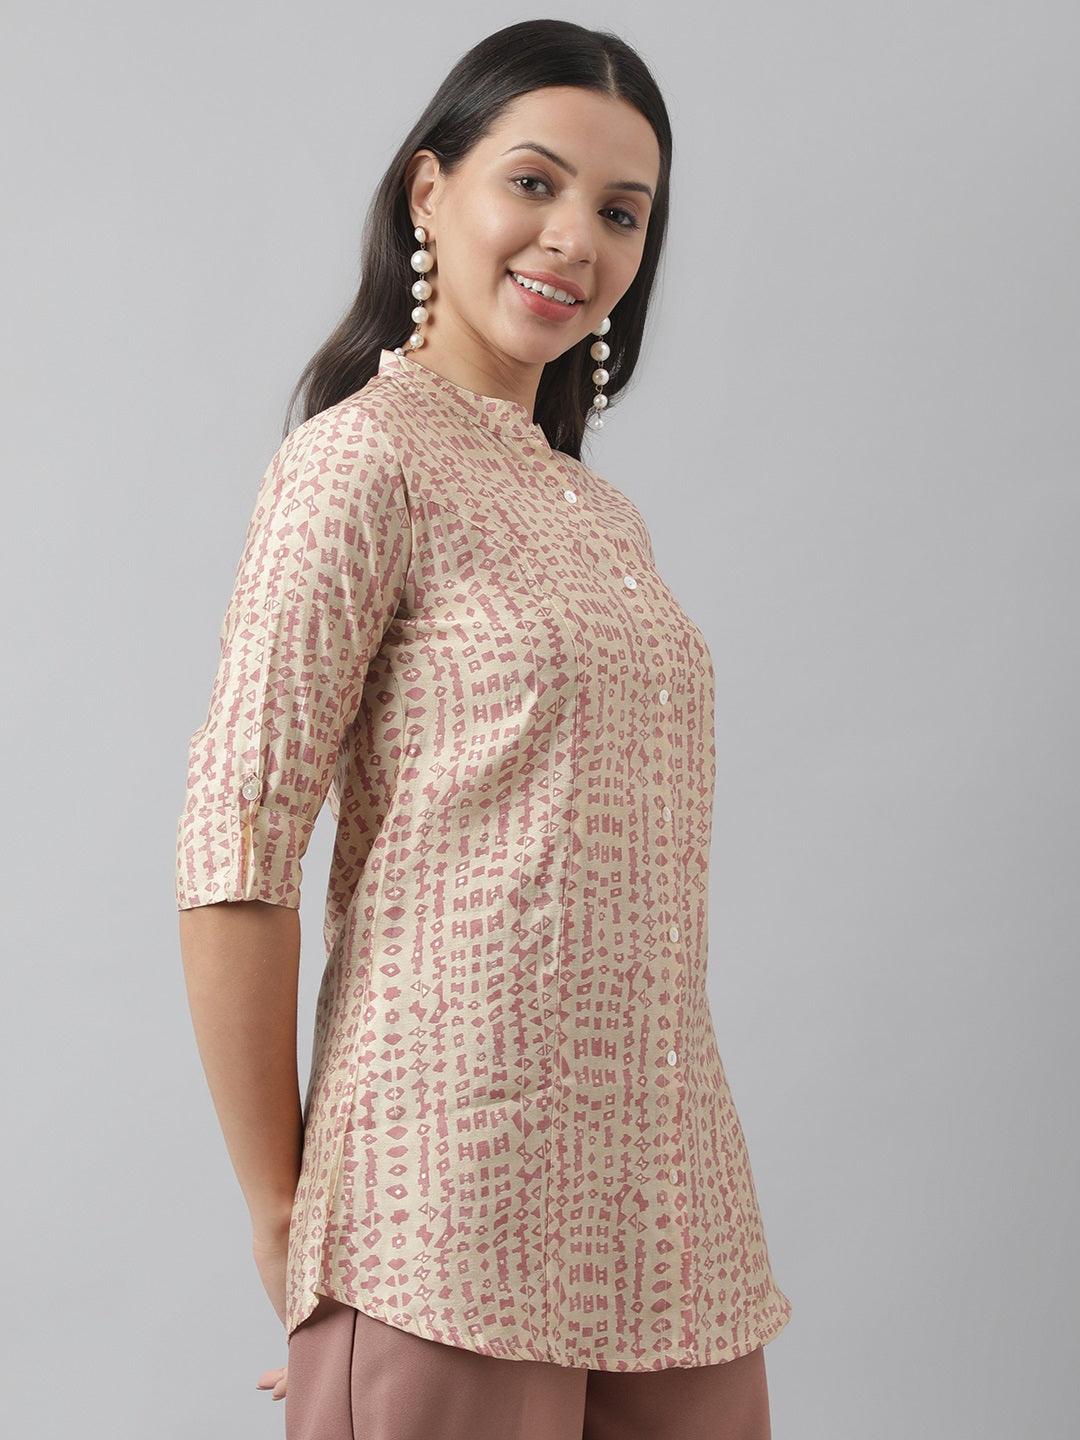 Divena Beige Floral Printed Muslin A-line Shirt Style Top - divena world